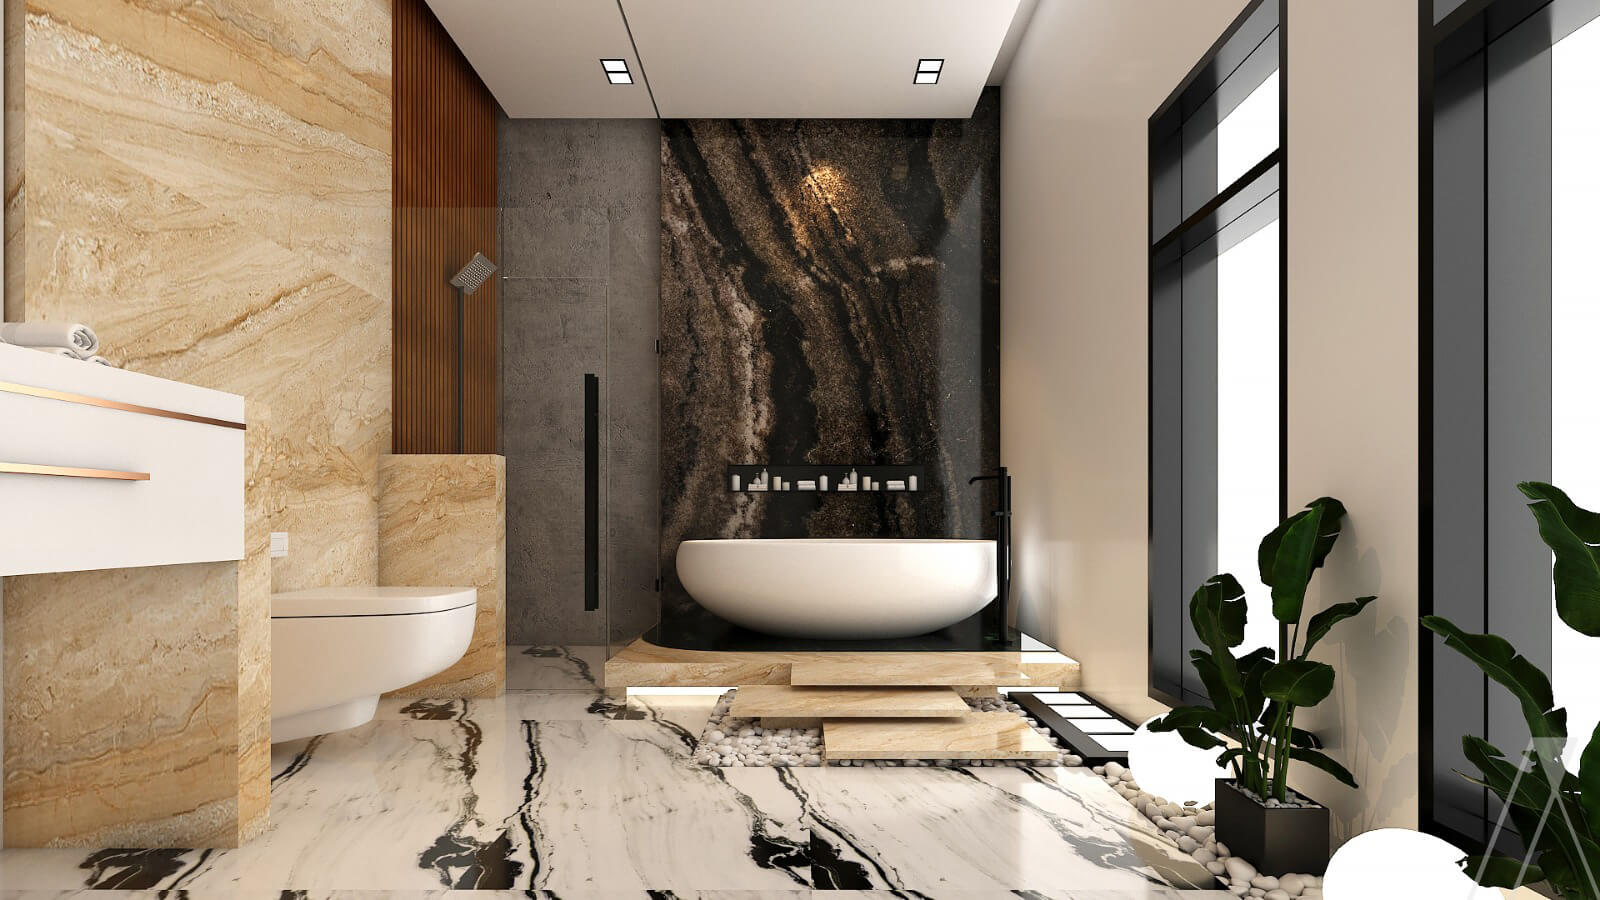 Washroom Interior Design in Pakistan by Primarc Studio